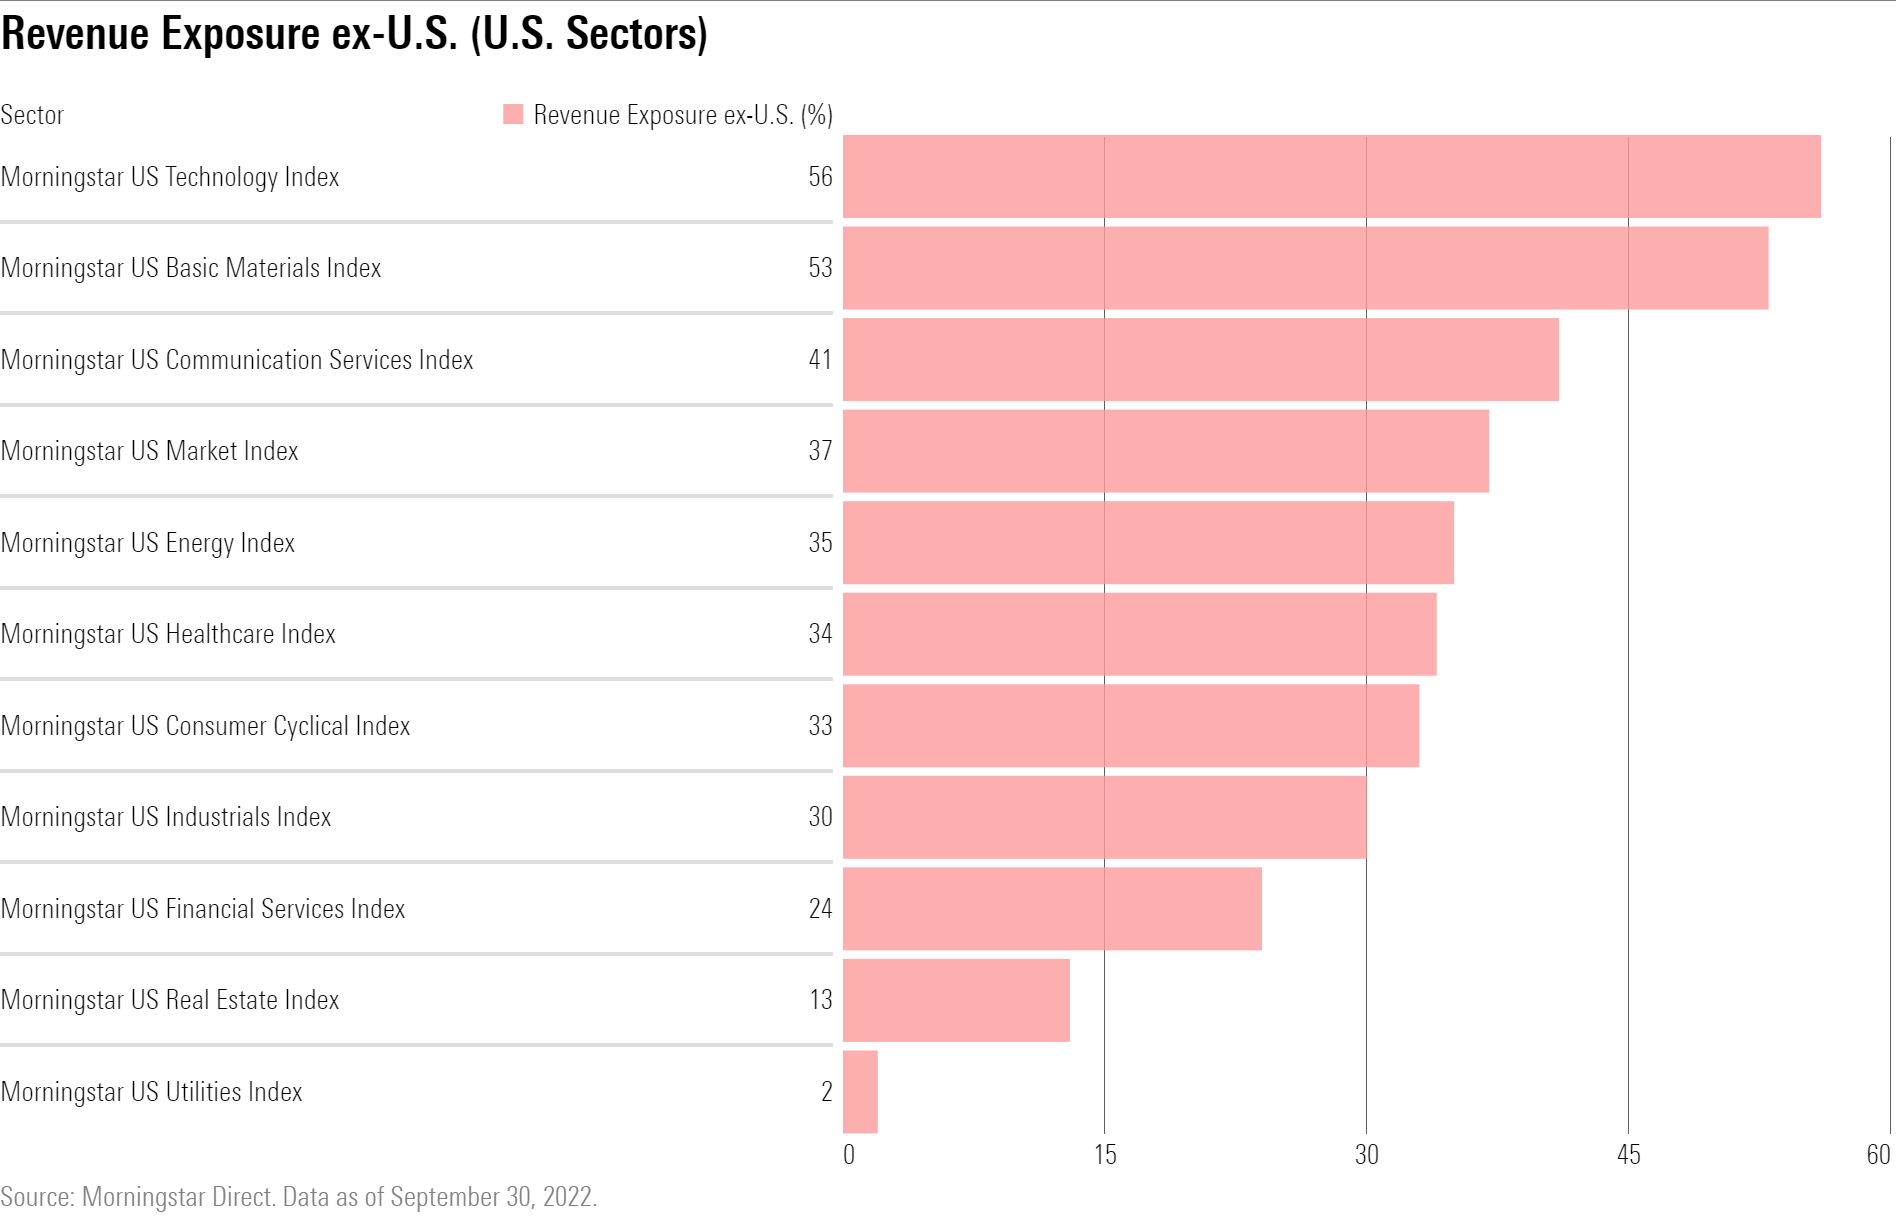 A bar chart of revenue exposure for U.S. industry sectors, excluding U.S. revenue.